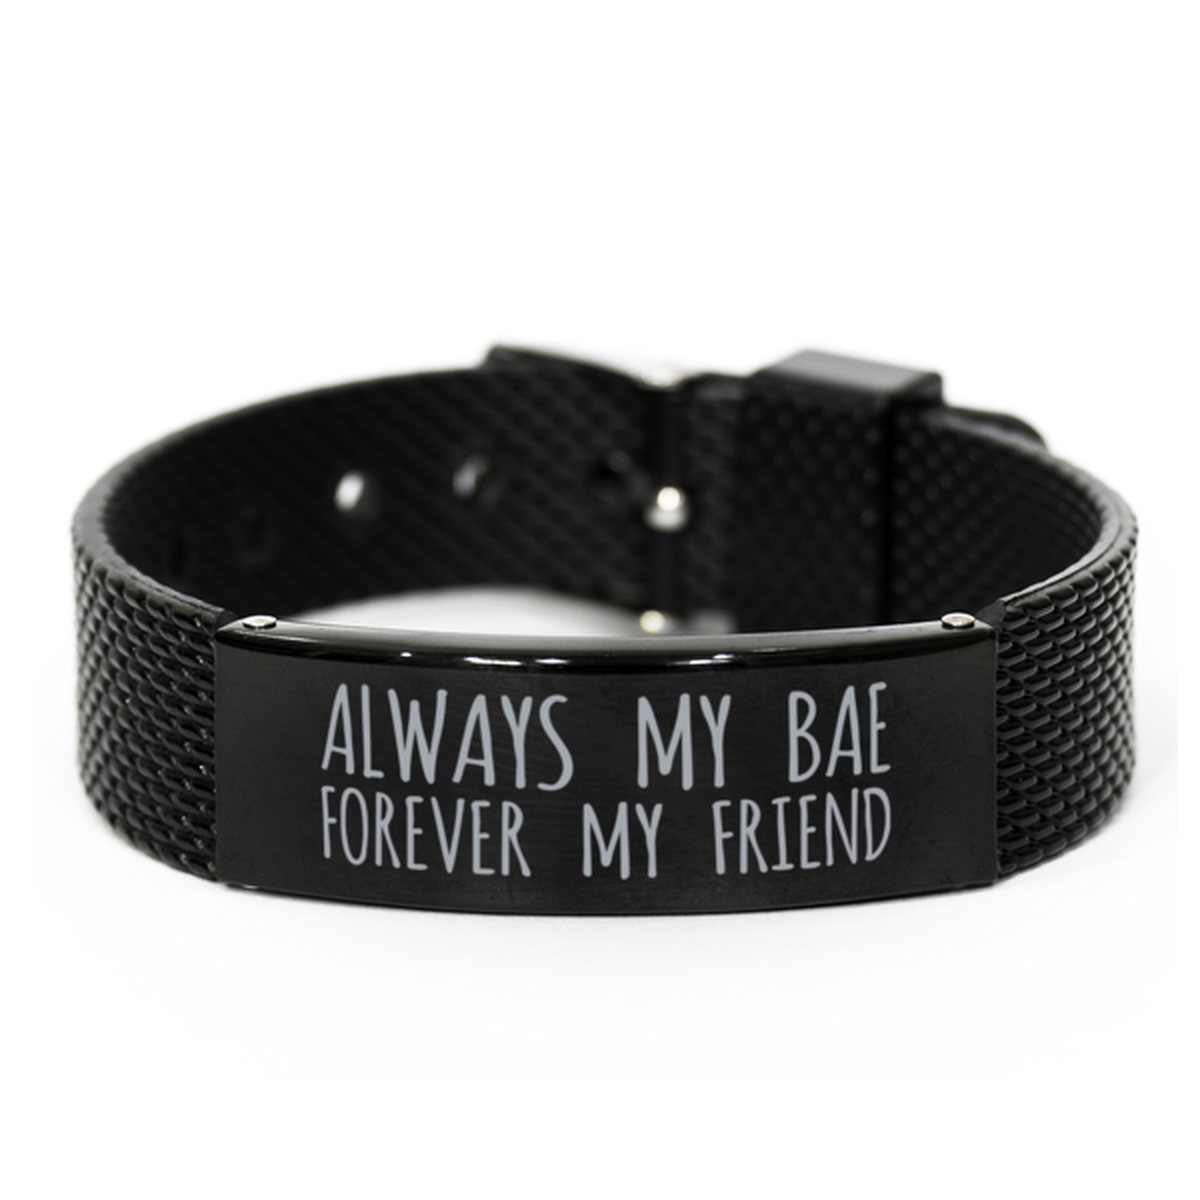 Inspirational Bae Black Shark Mesh Bracelet, Always My Bae Forever My Friend, Best Birthday Gifts for Family Friends